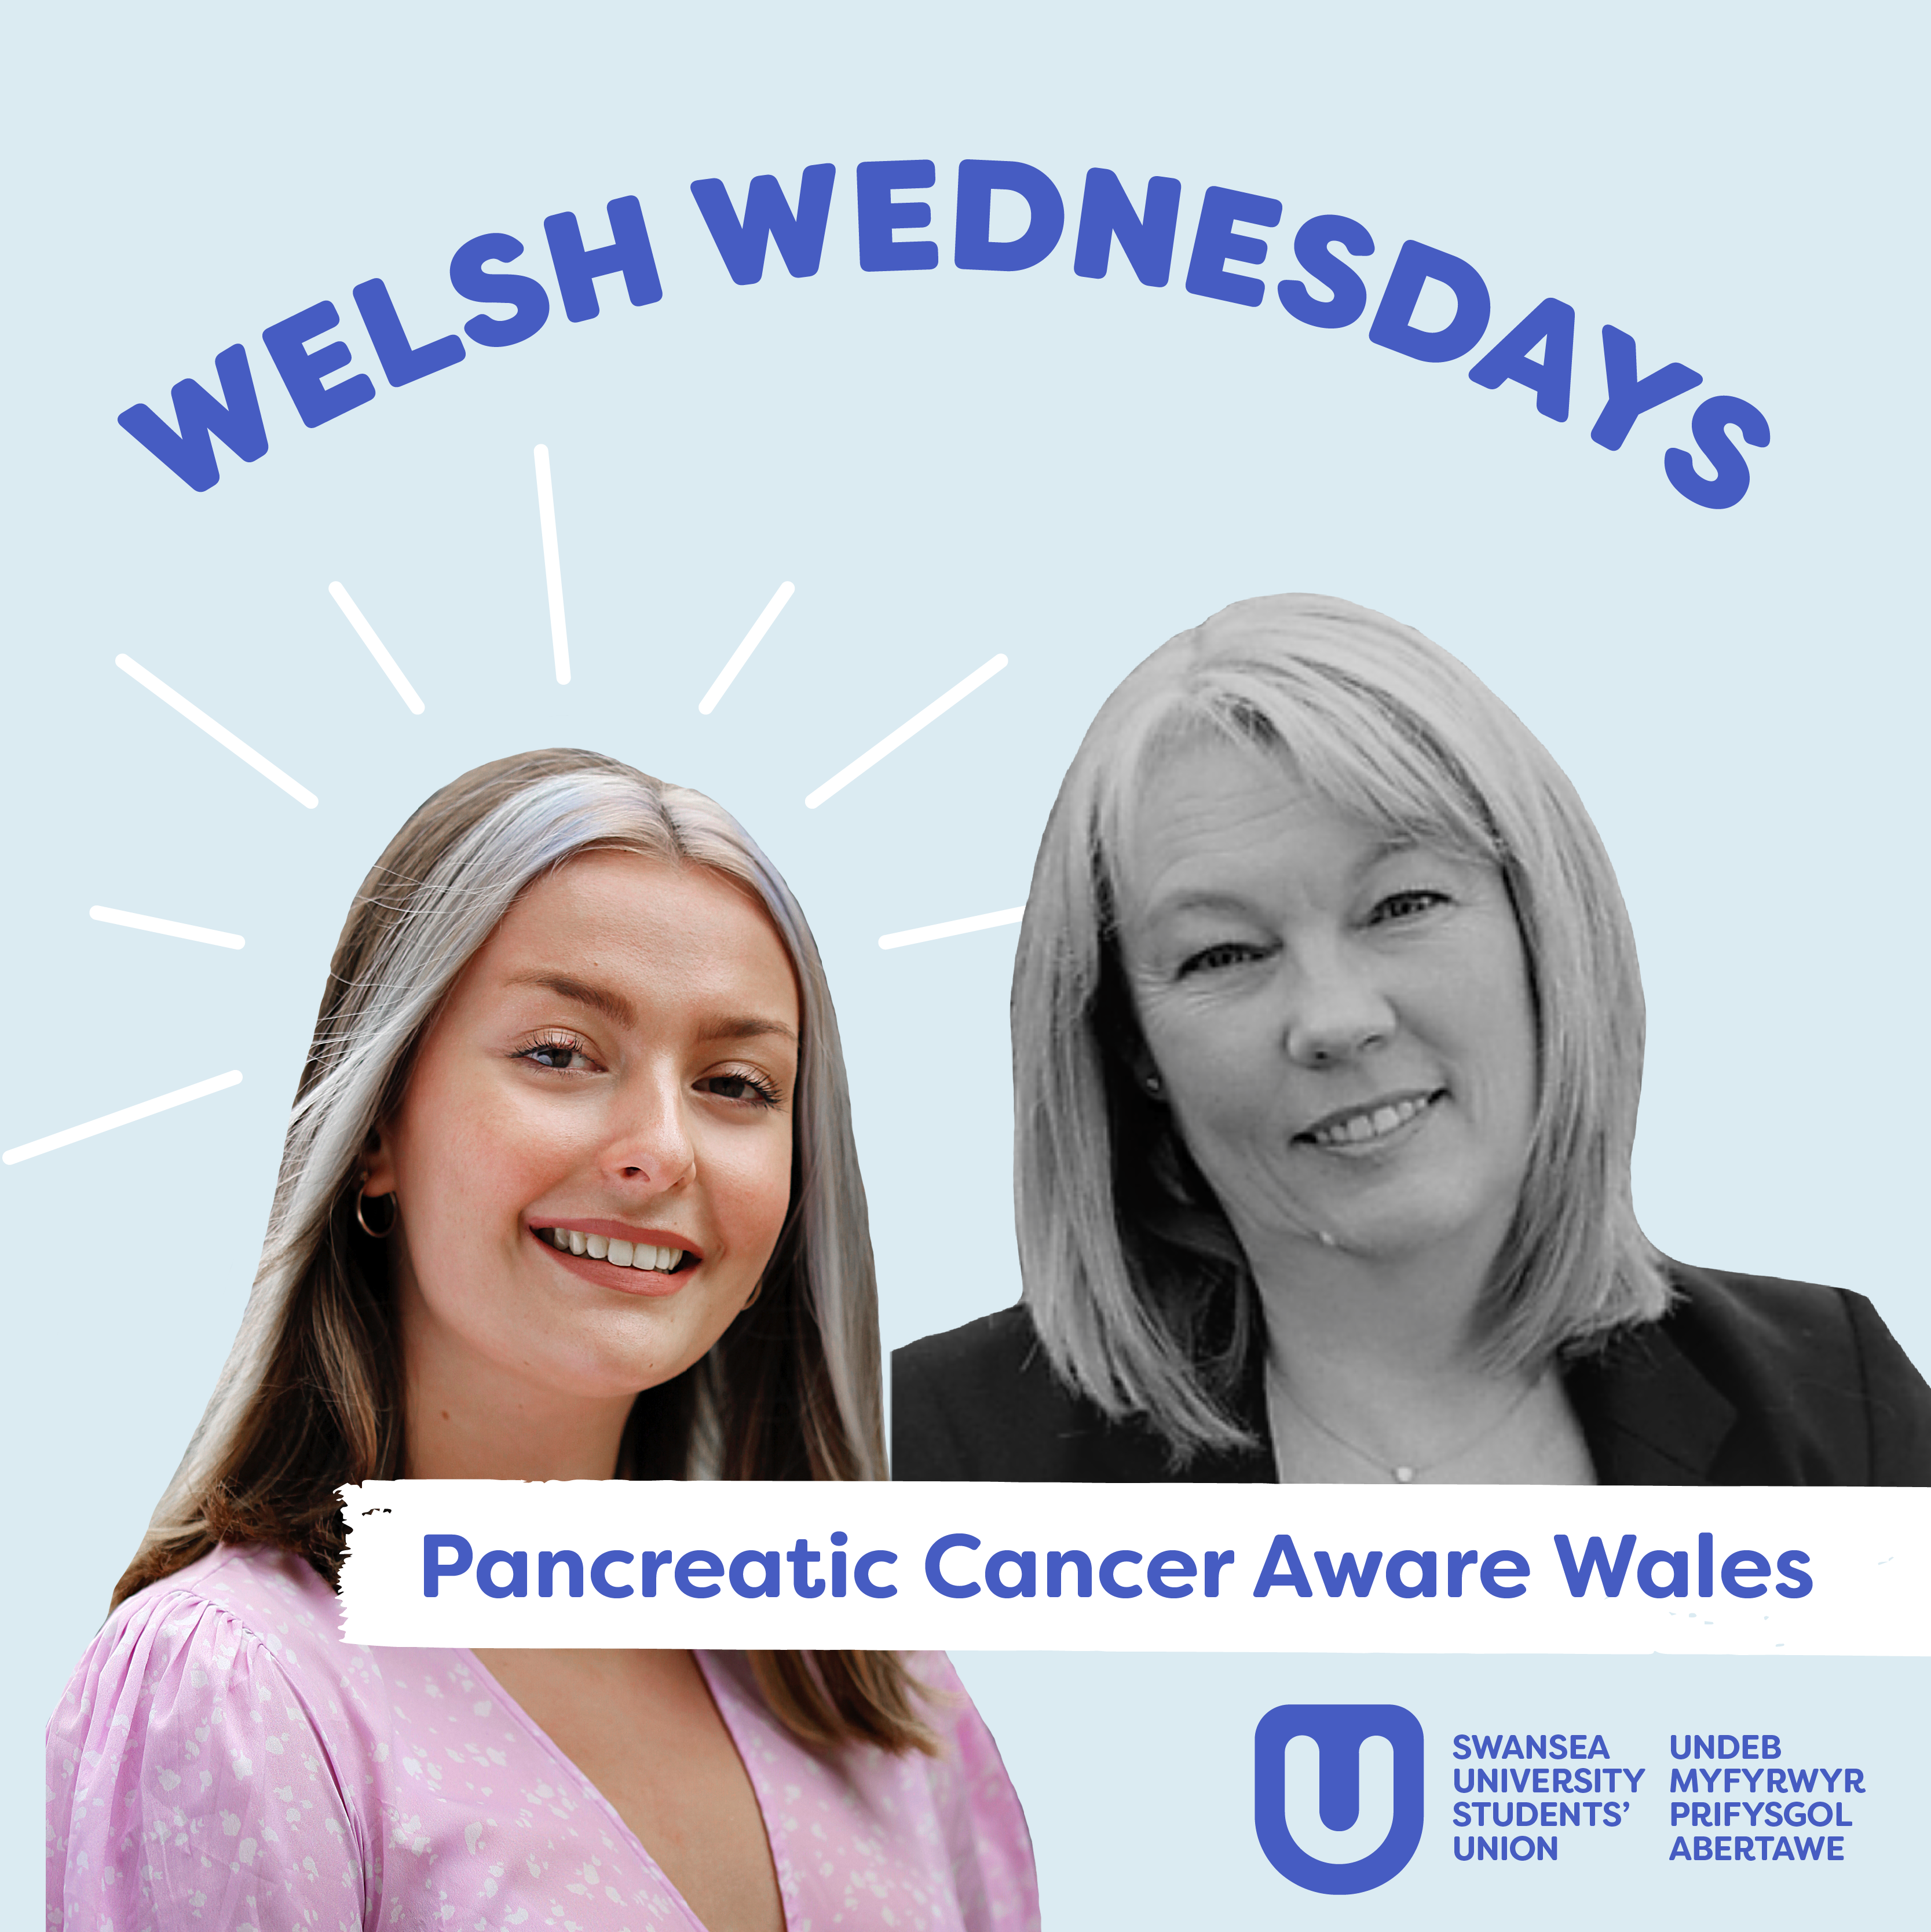 Welsh Wednesdays Podcast